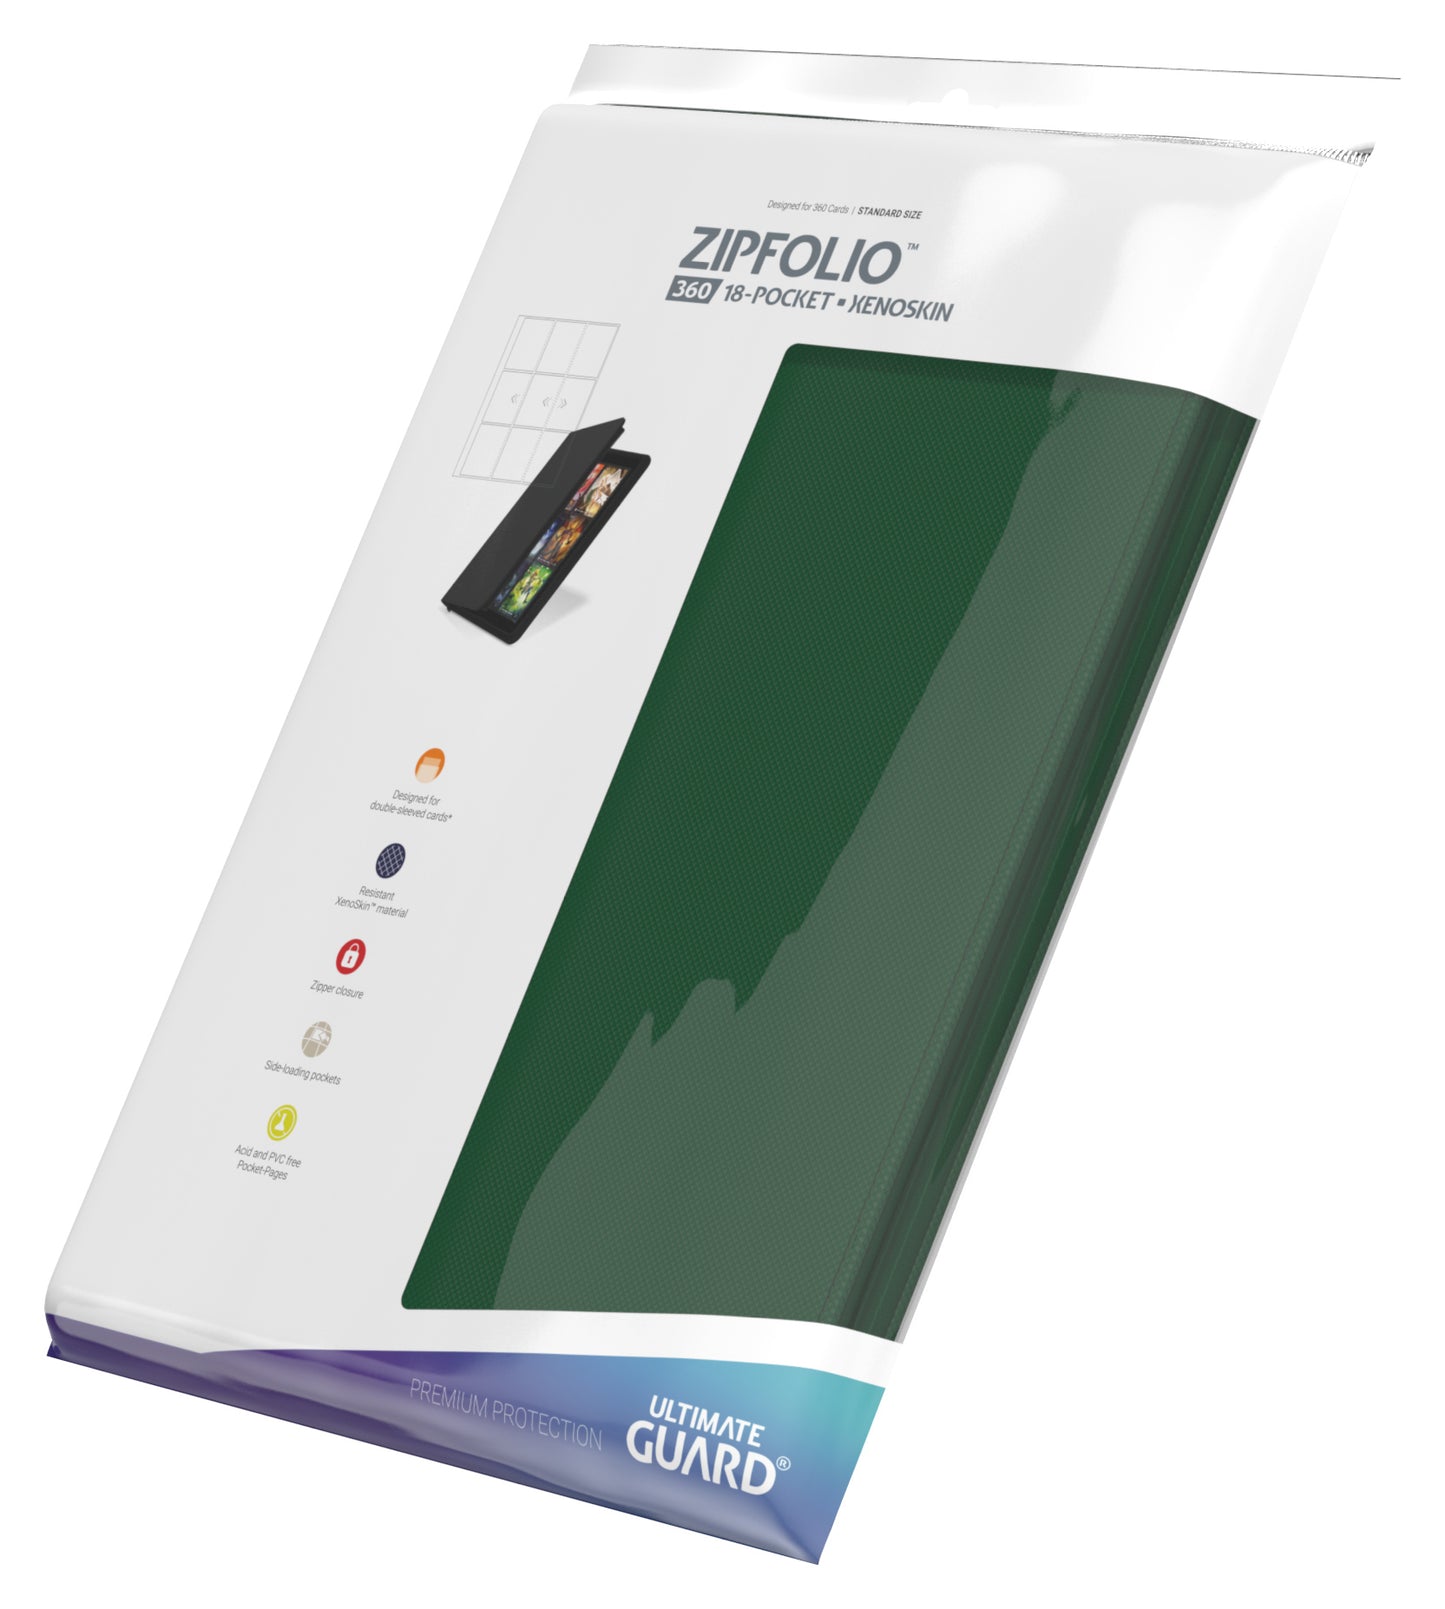 Ultimate Guard - Zipfolio 360 - 18 Pocket Xenoskin  - Green